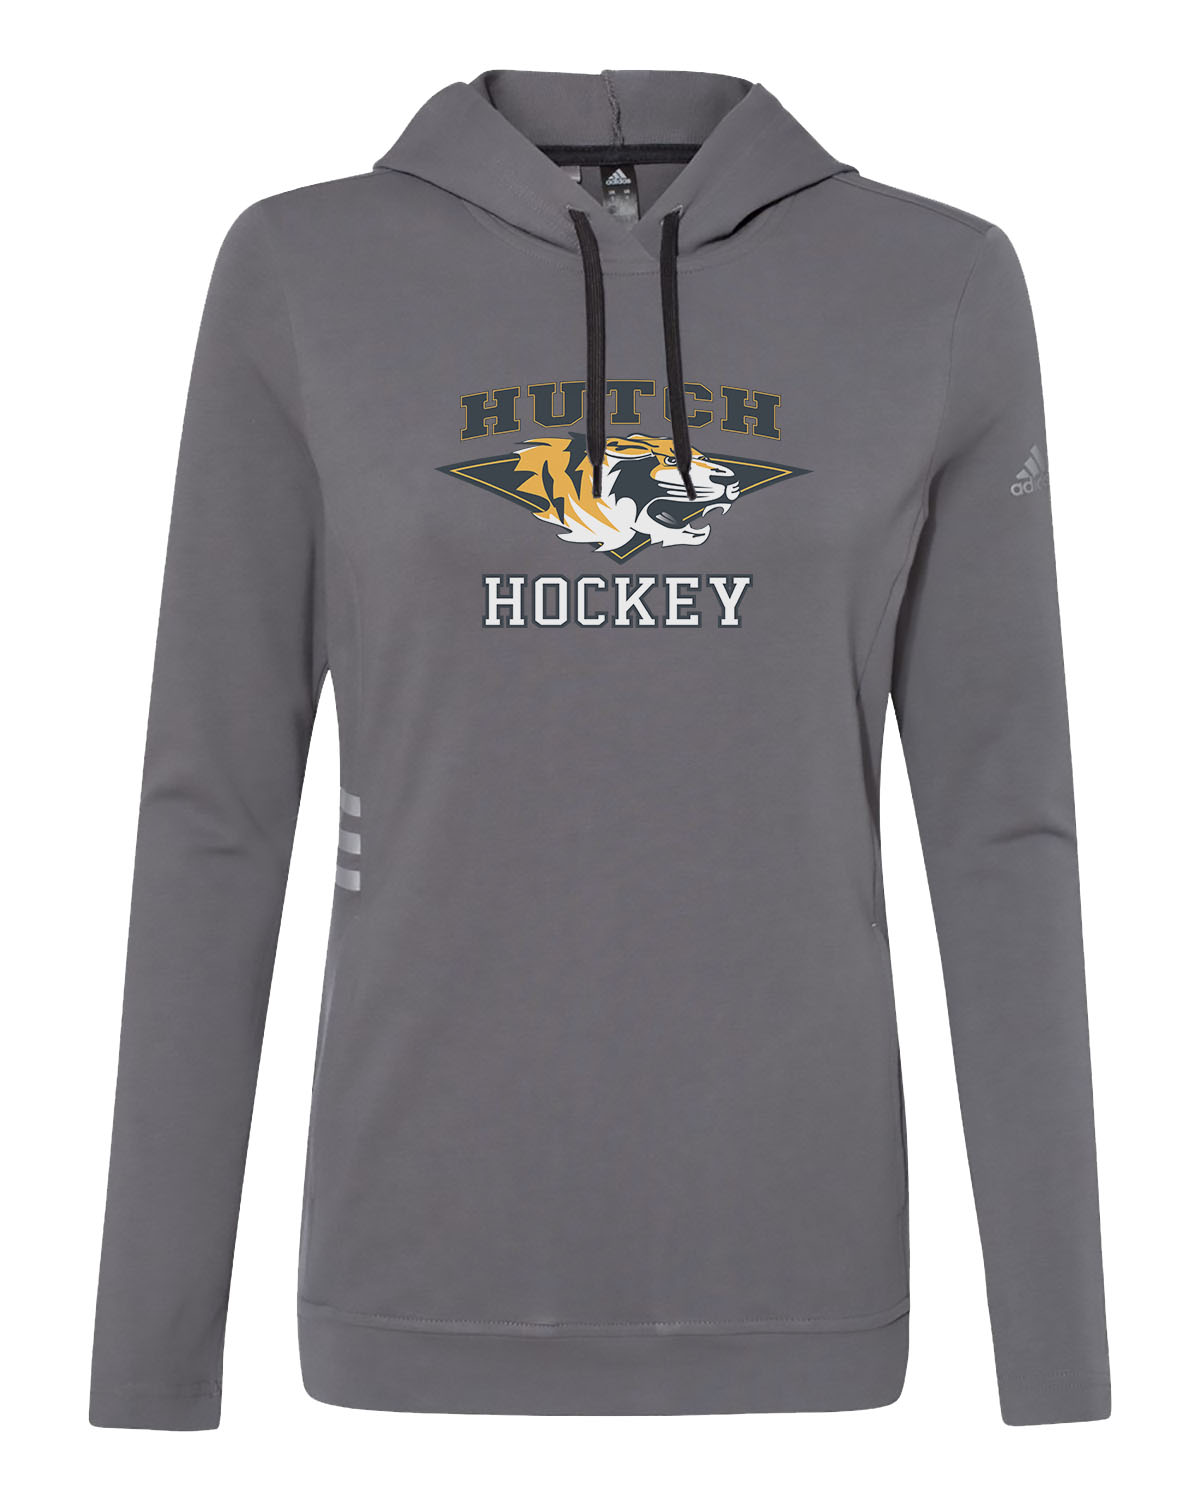 Hutchinson Hockey // Women's Lightweight Hoodie - Adidas